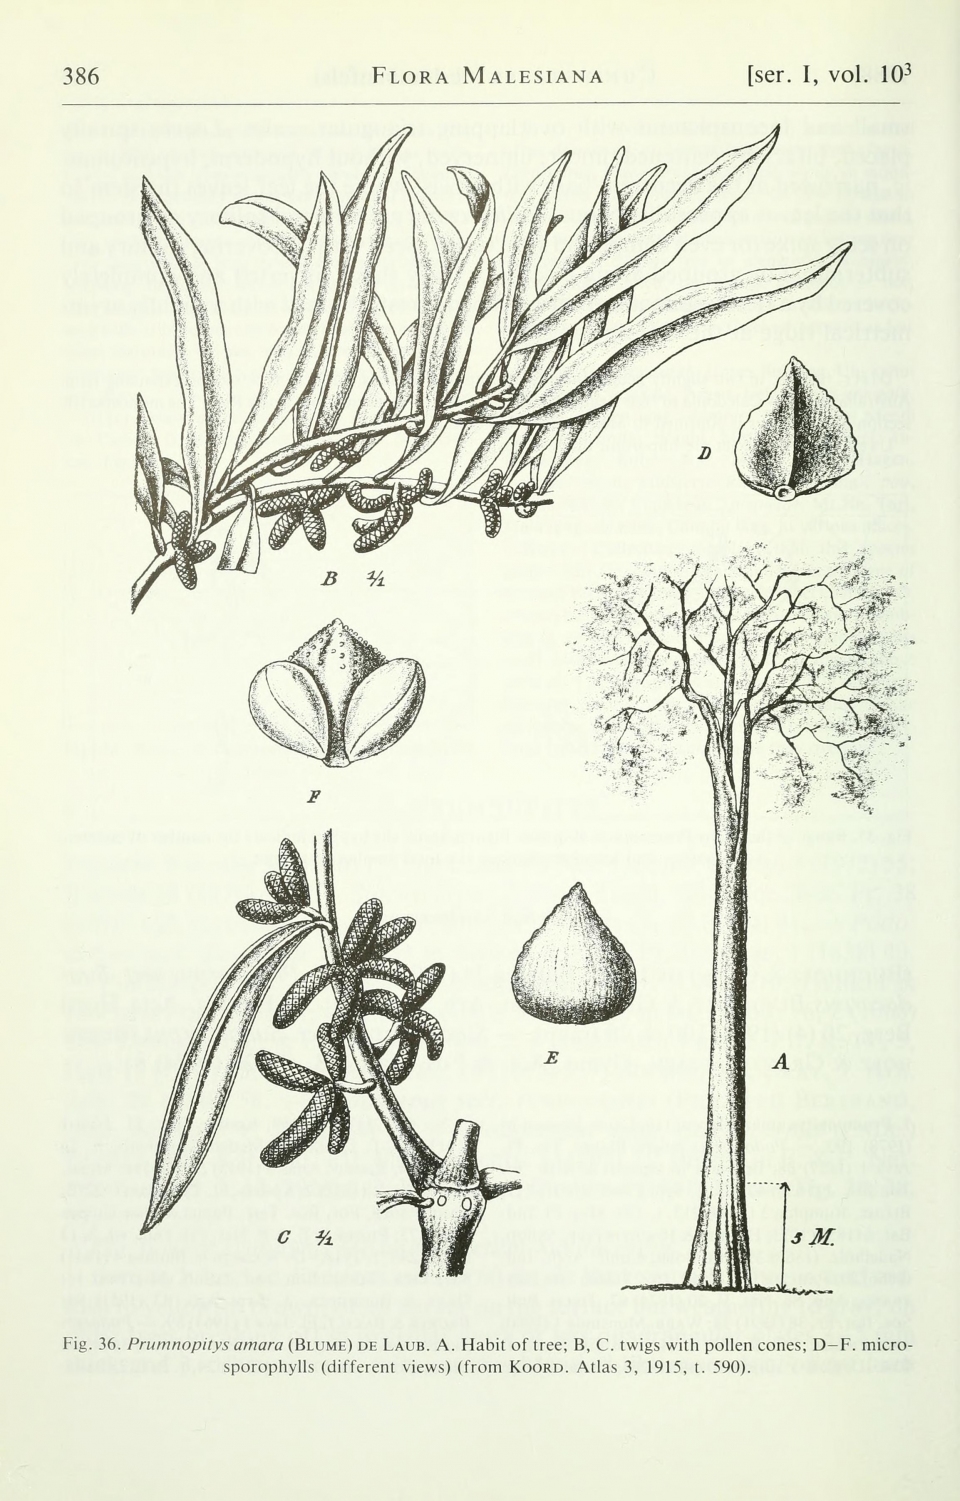 Sundacarpus amarus